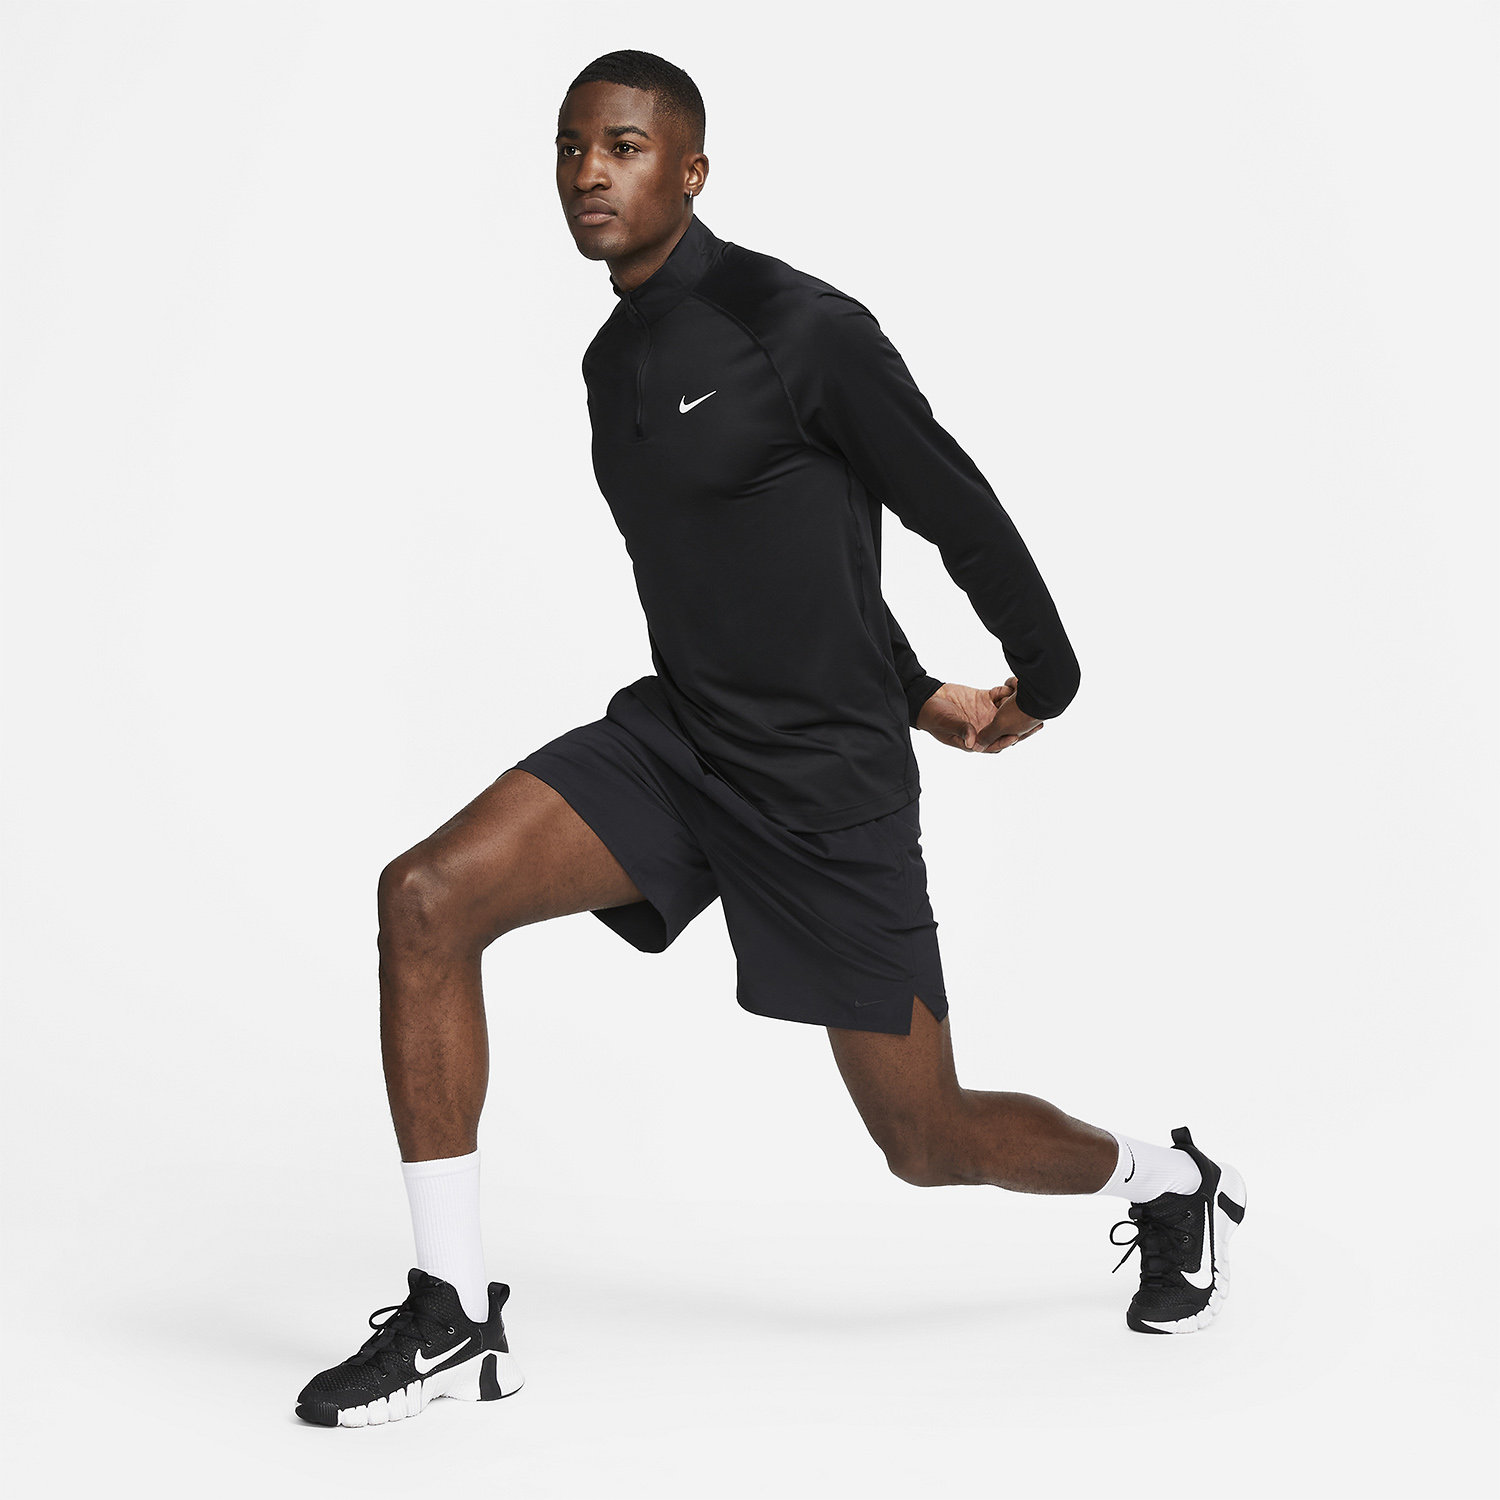 Nike Ready Men's Training Shirt - Black/White